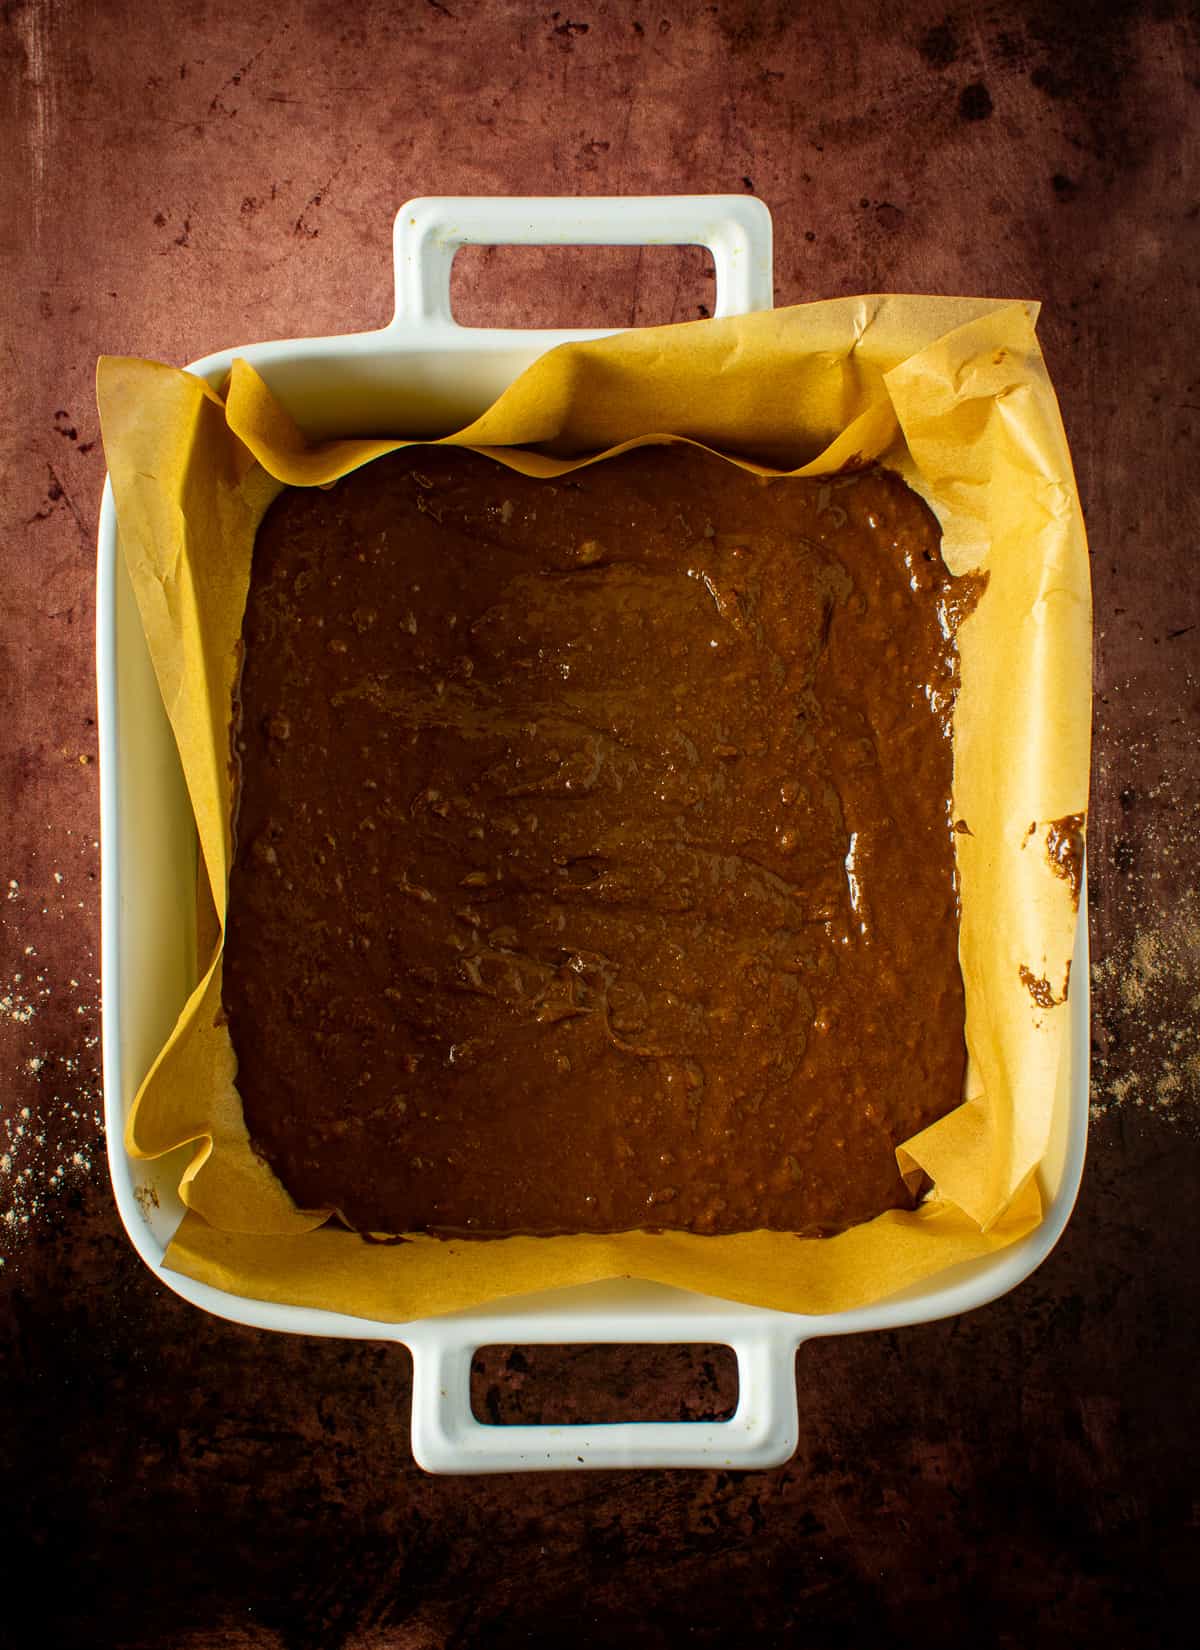 vegan brownie batter in baking dish.